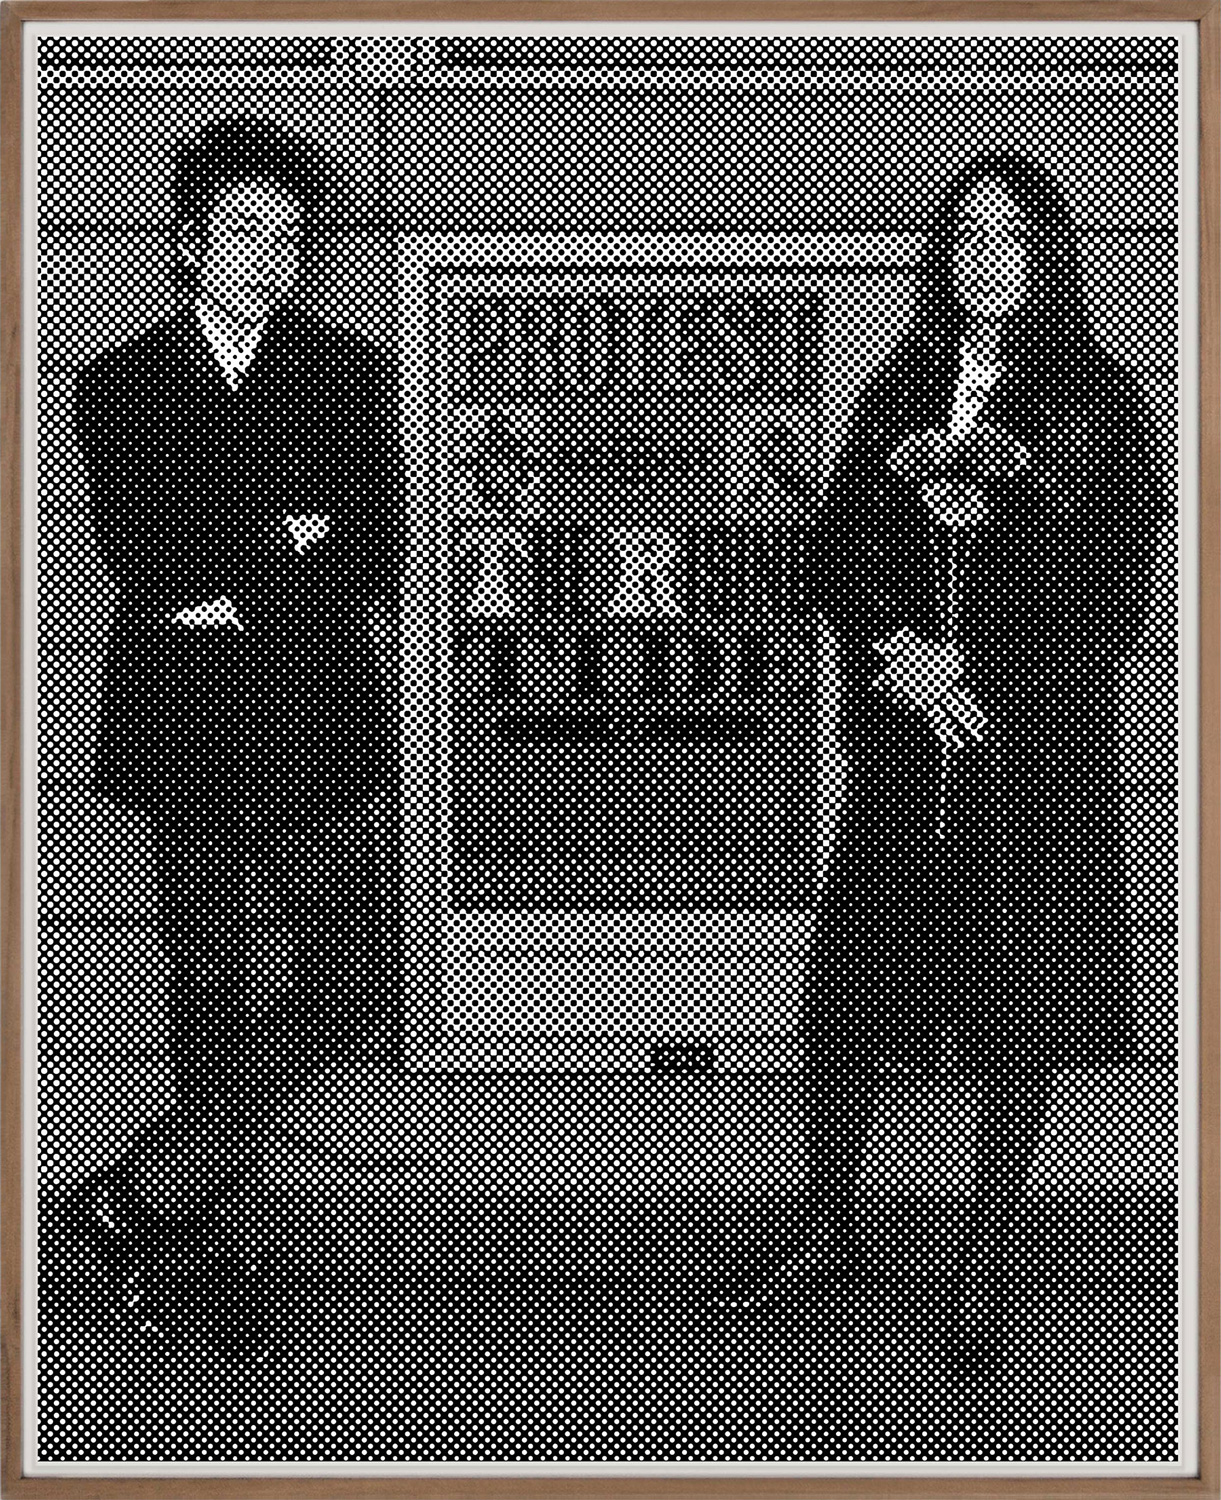 Alex Hanimann - 1964 [Bob Dylan and Joan Baez flanking a Seymour Chwast poster],, 2017